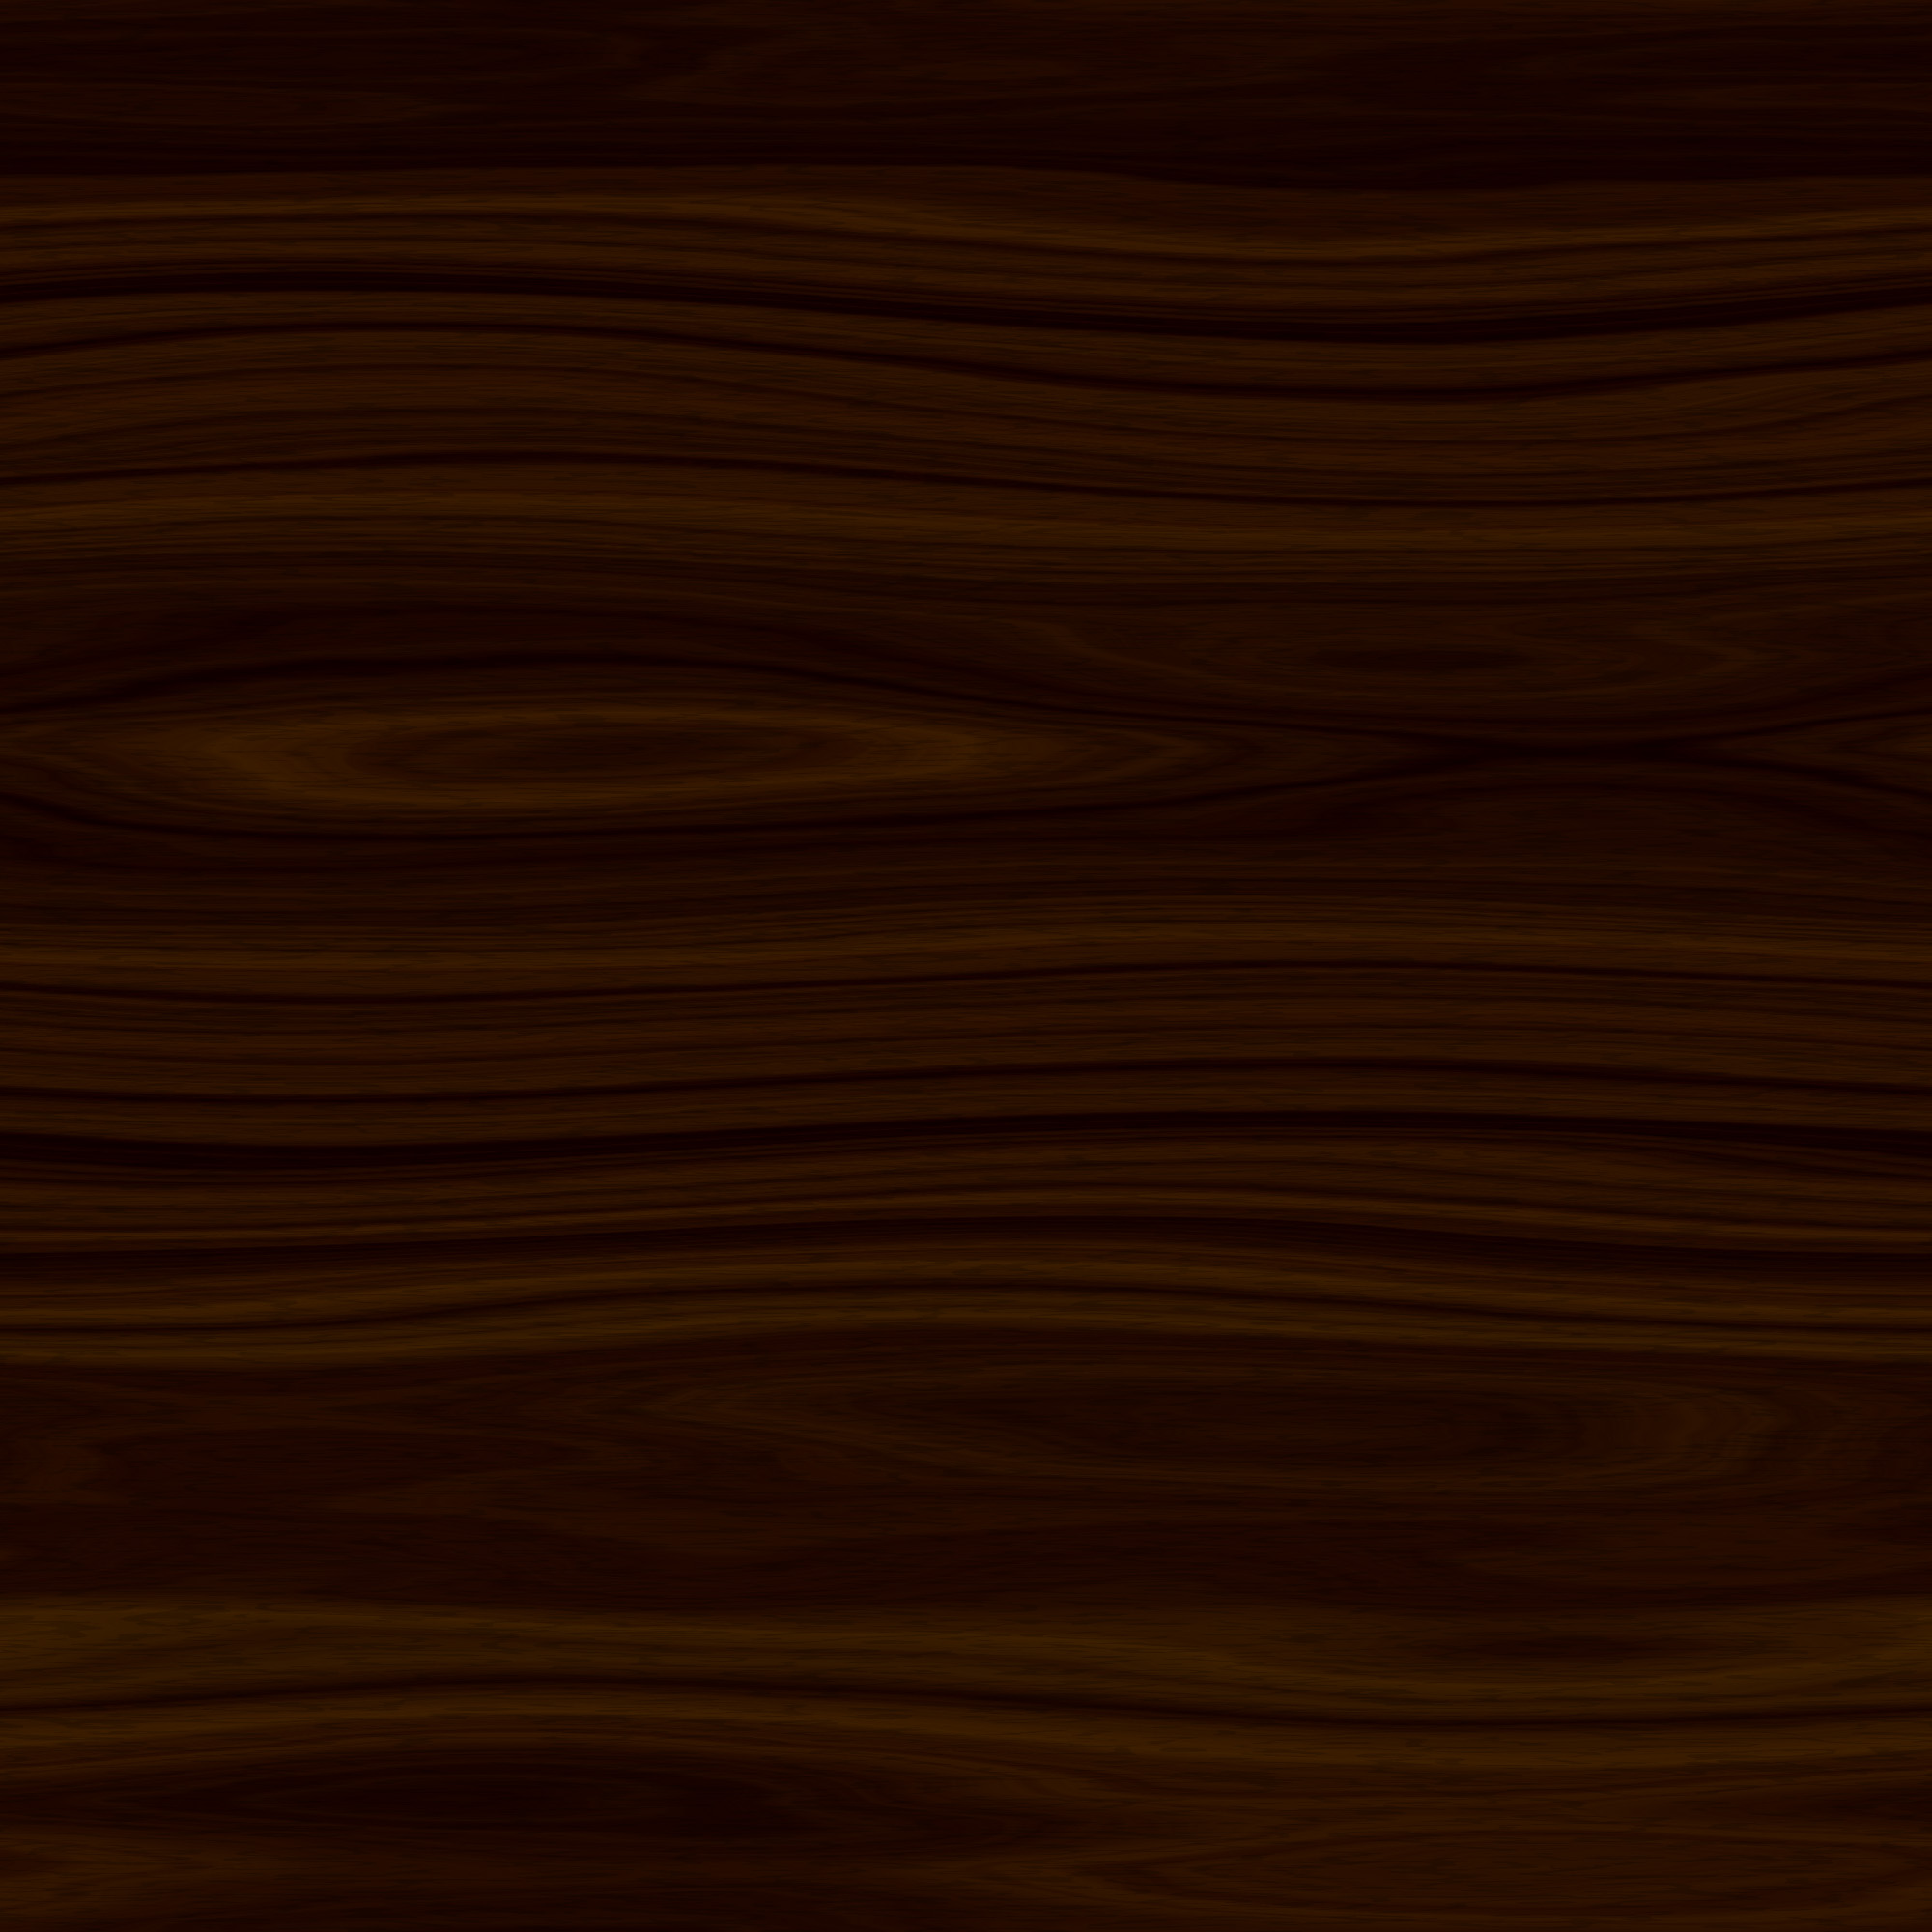 A dark and deep seamless wood texture